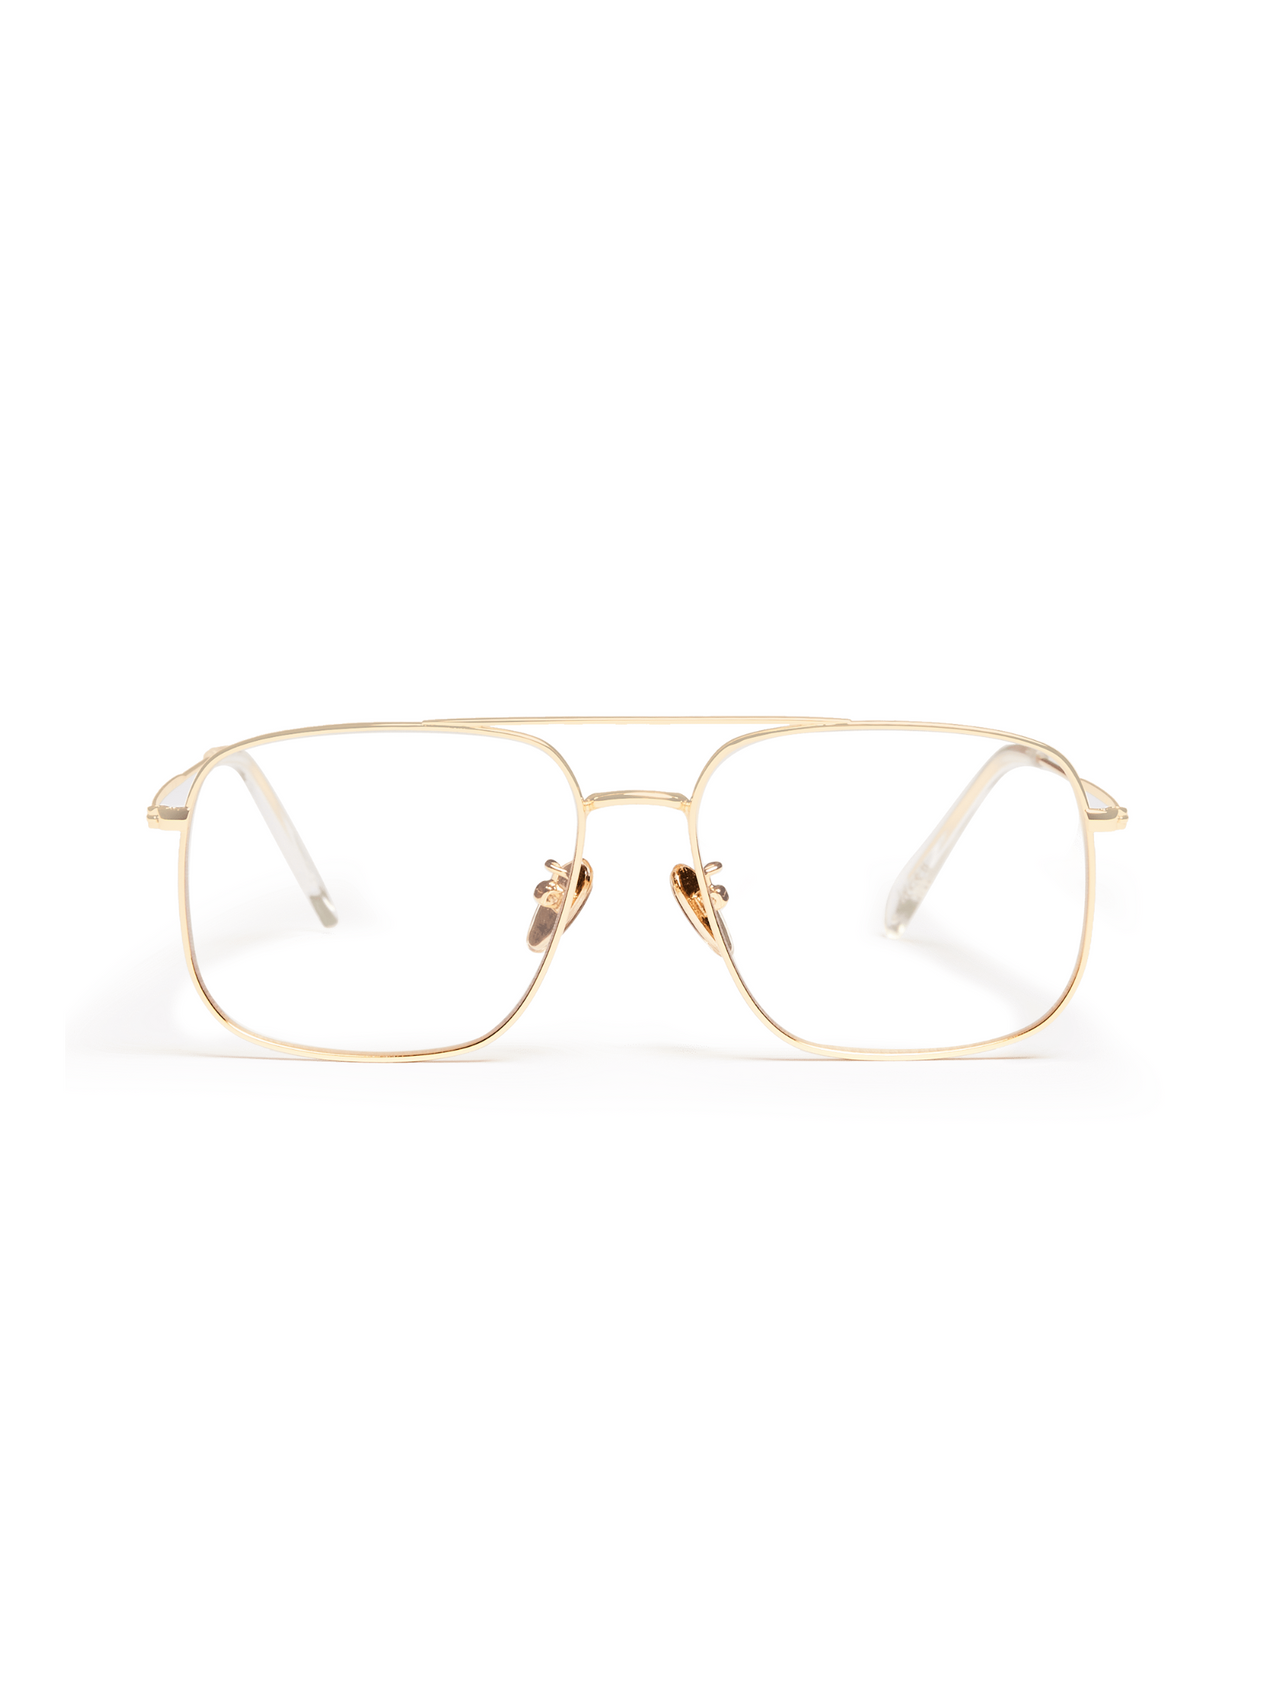 The Toni Blue Light Glasses Gold, Sunglass Acc by BANBE Eyewear | LIT Boutique